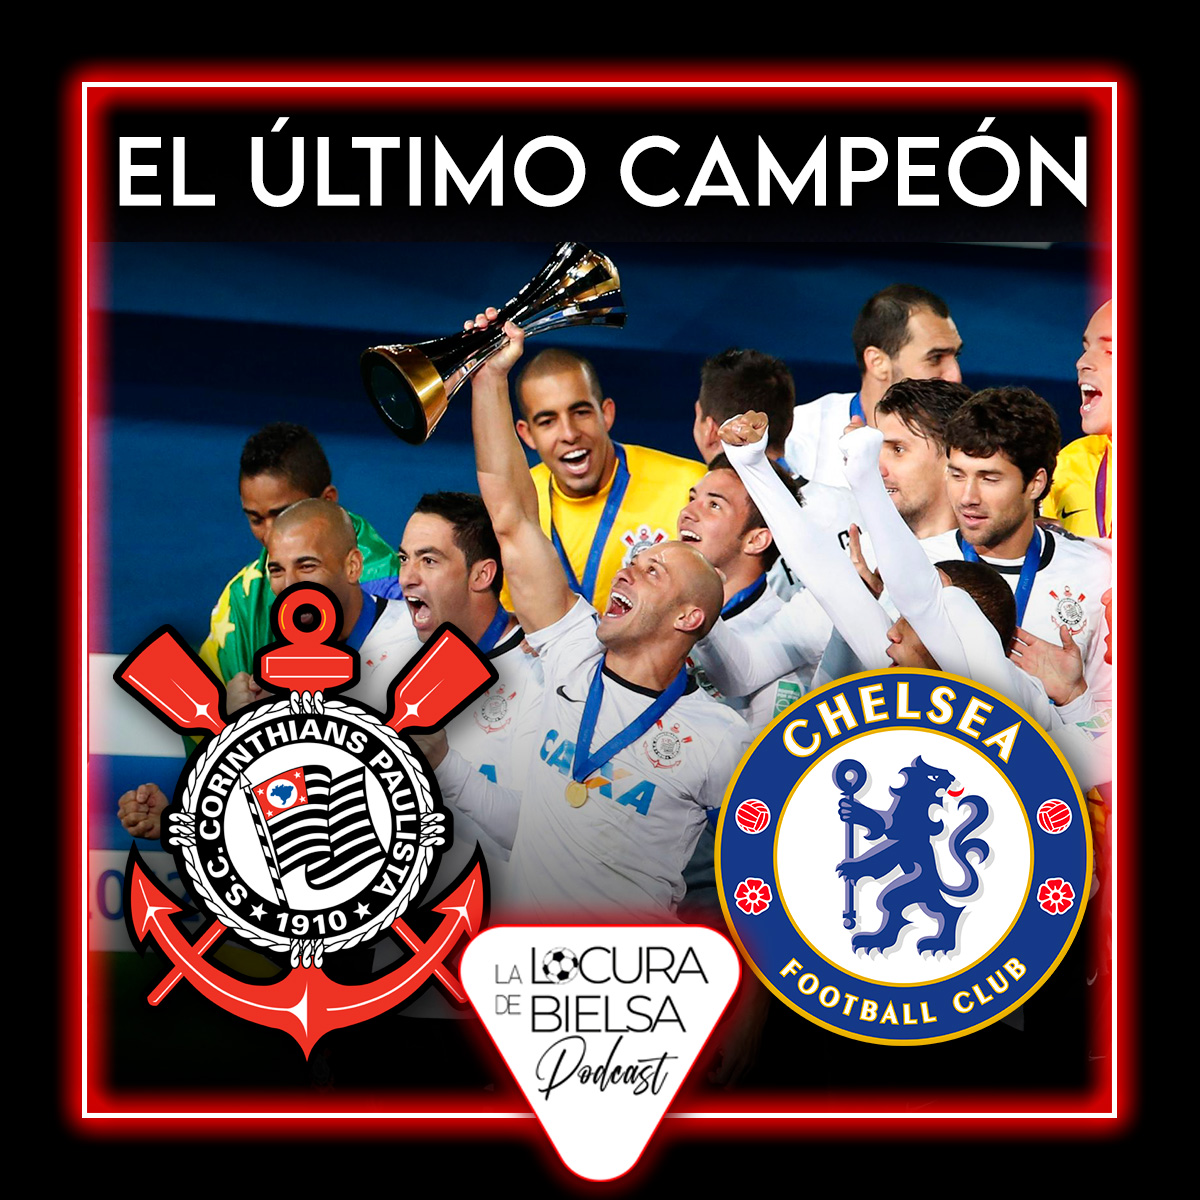 Corinthians campeón del mundo 2012 chelsea locura de Bielsa podcast futbol